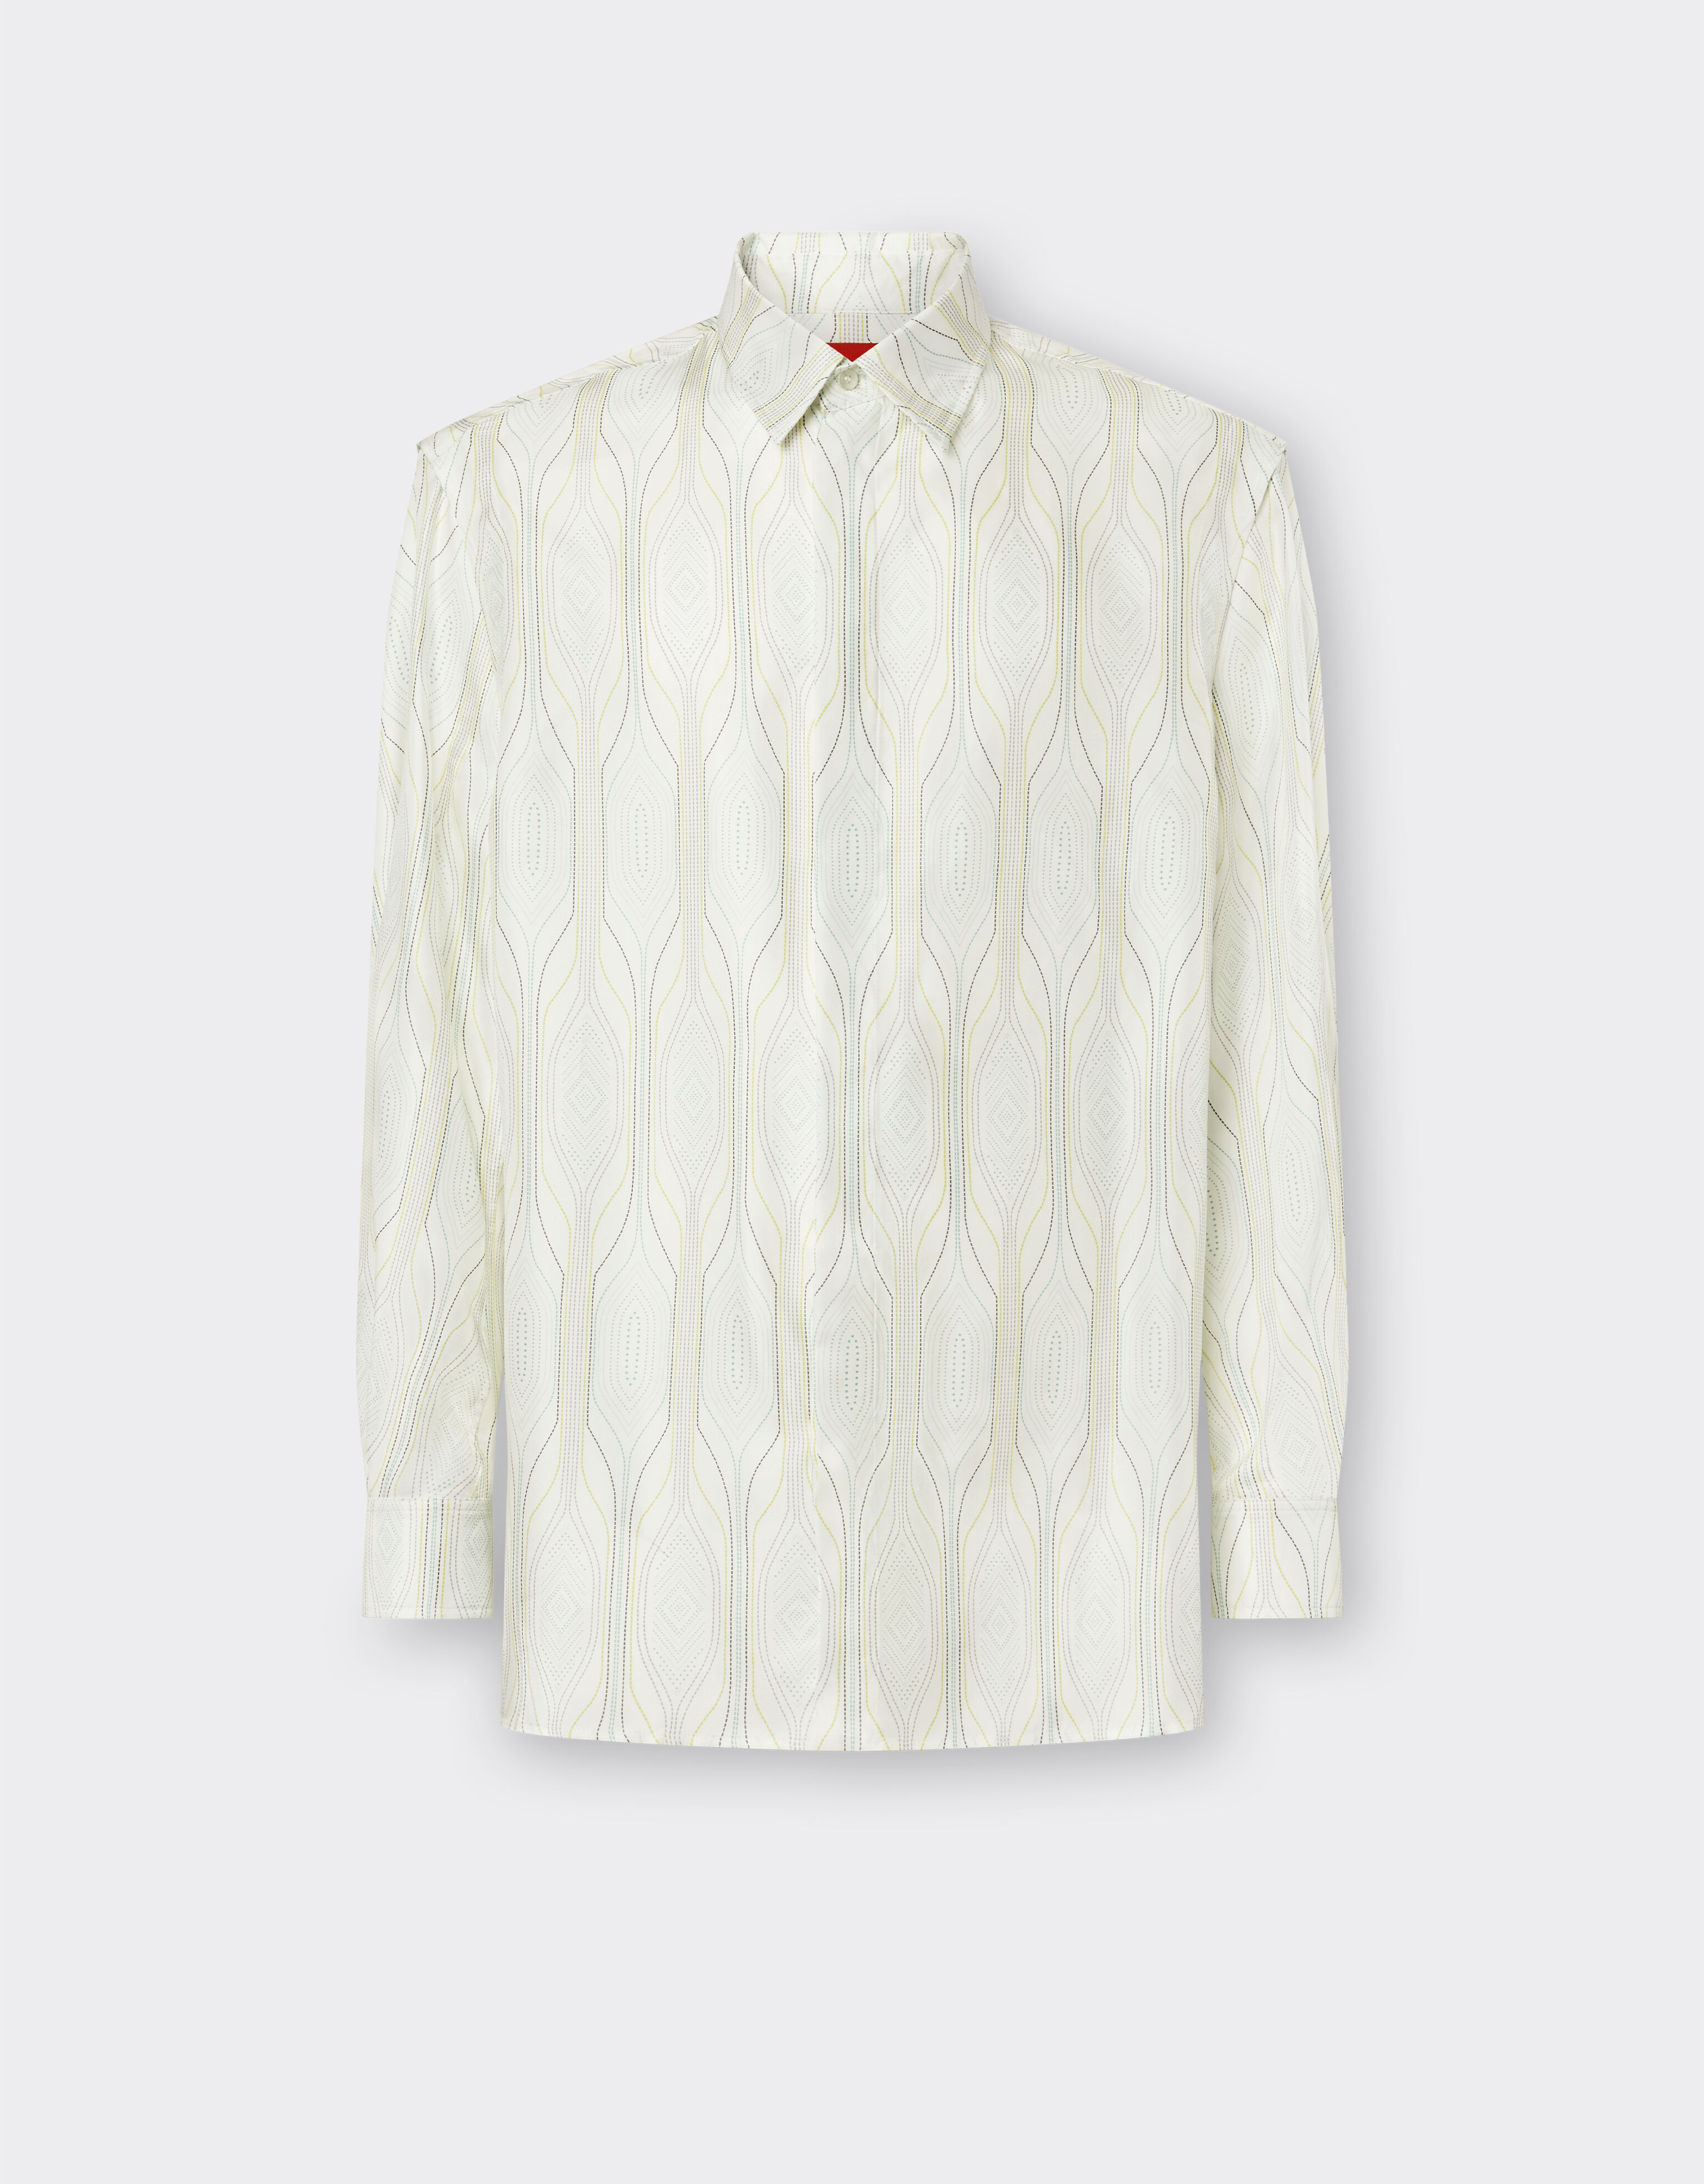 Ferrari Miami collection long-sleeved shirt in silk Aquamarine 21229f